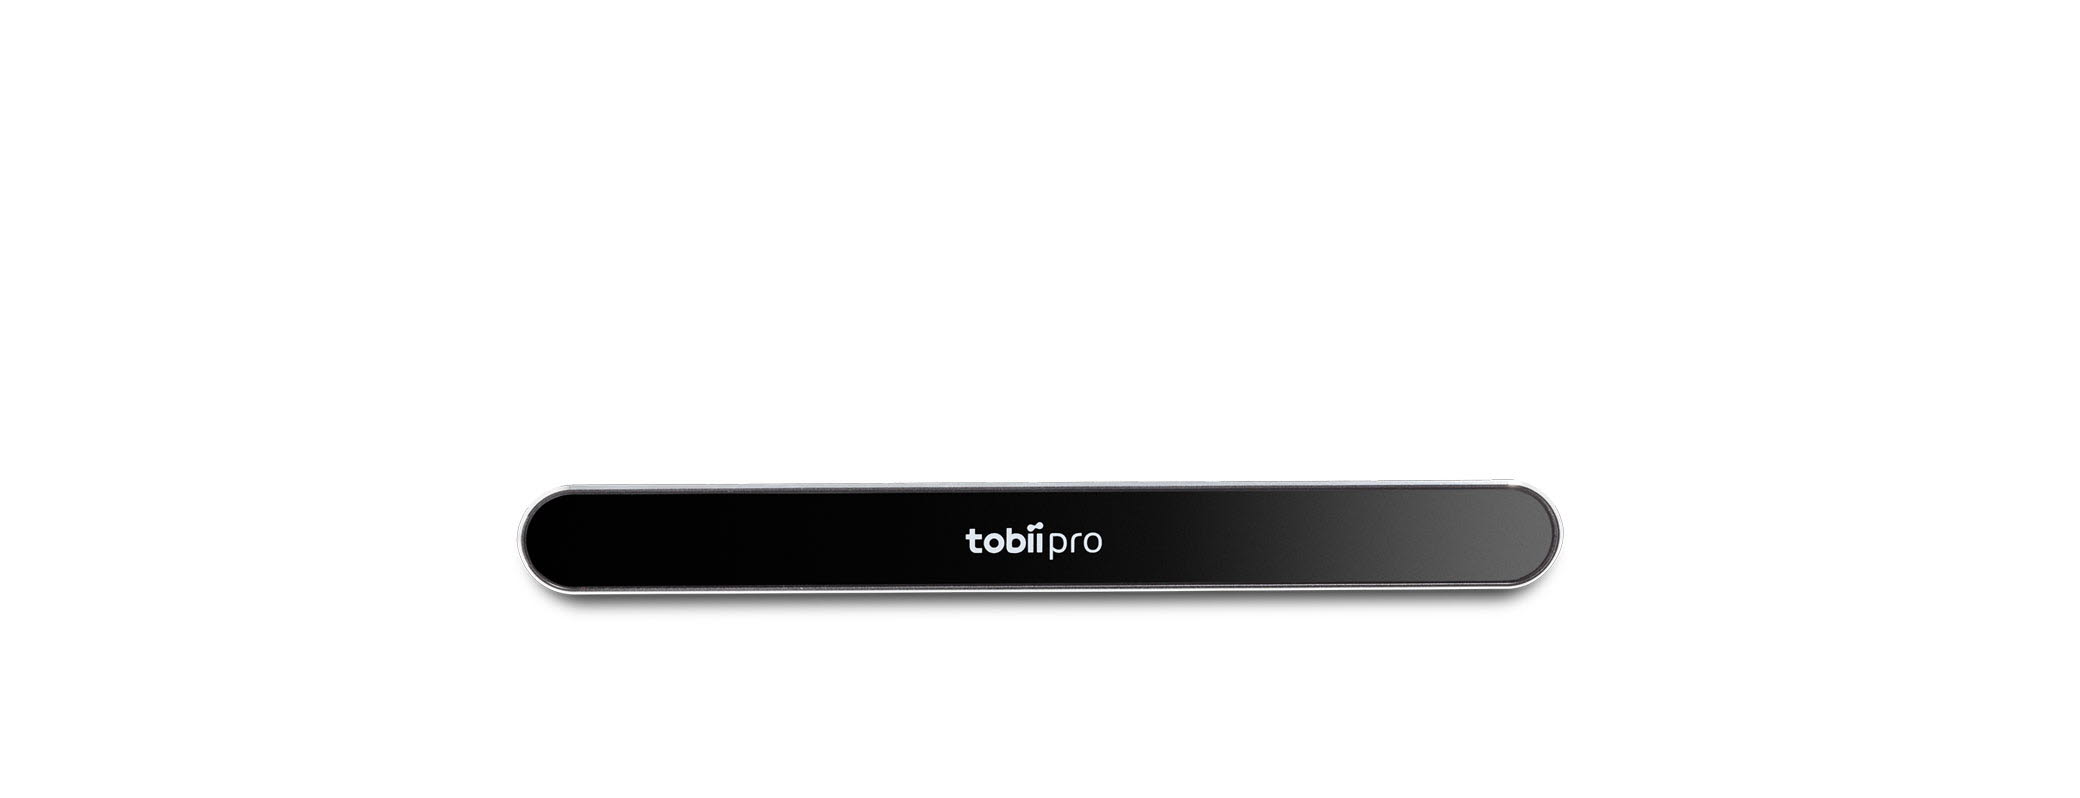 Quick and easy eye tracking - Tobii Pro Nano